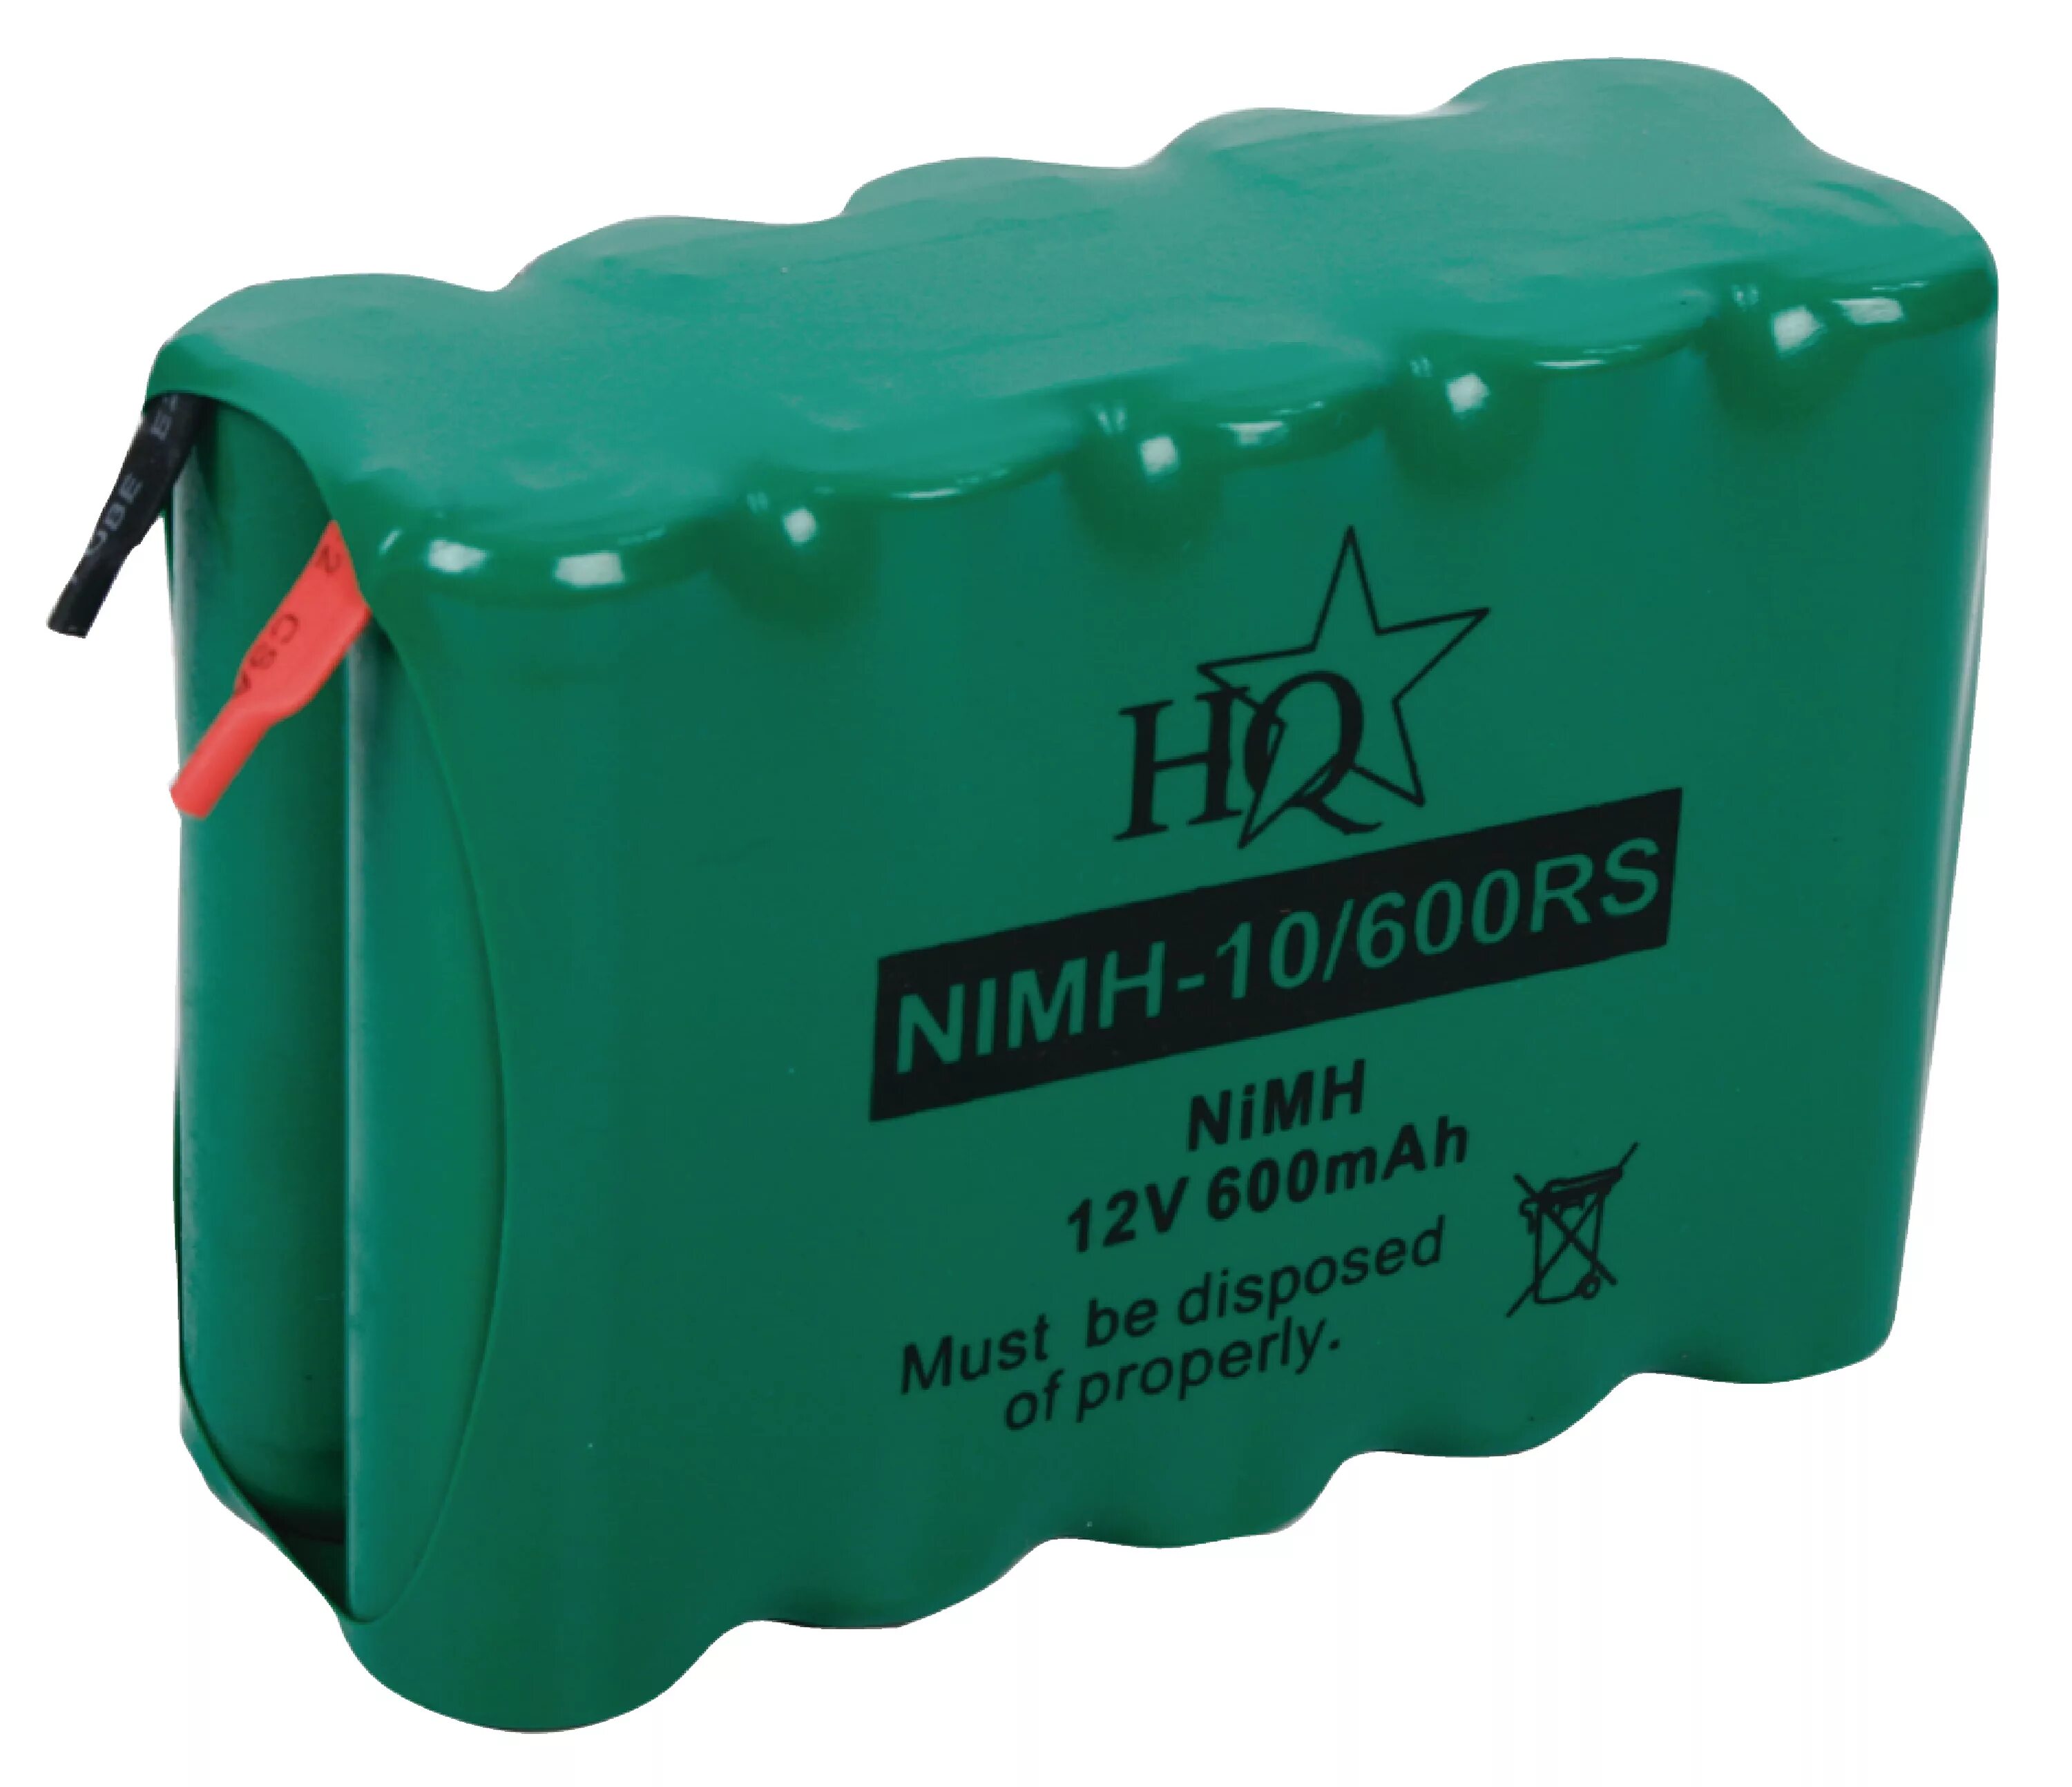 NIMH Battery Pack 12v. NICAD Battery Pack 12v 600mah. Аккумулятор 600mah AA. Ni-MH Battery Pack 4.8v.